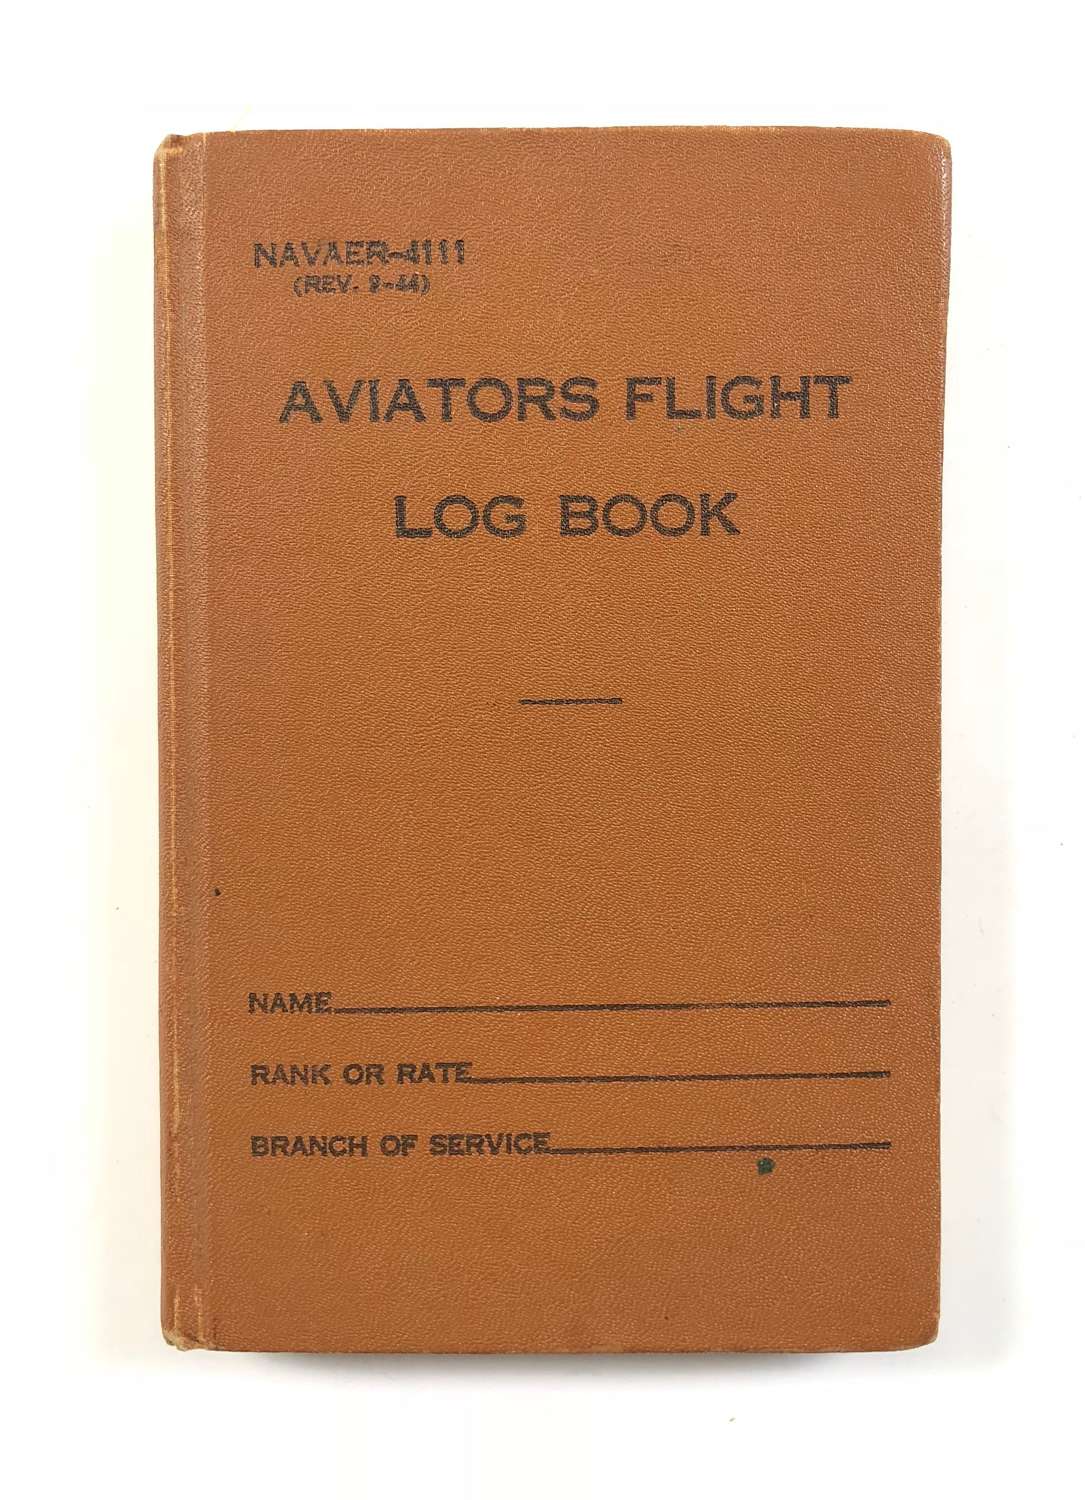 WW2 US Navy Pilot’s Log Book.